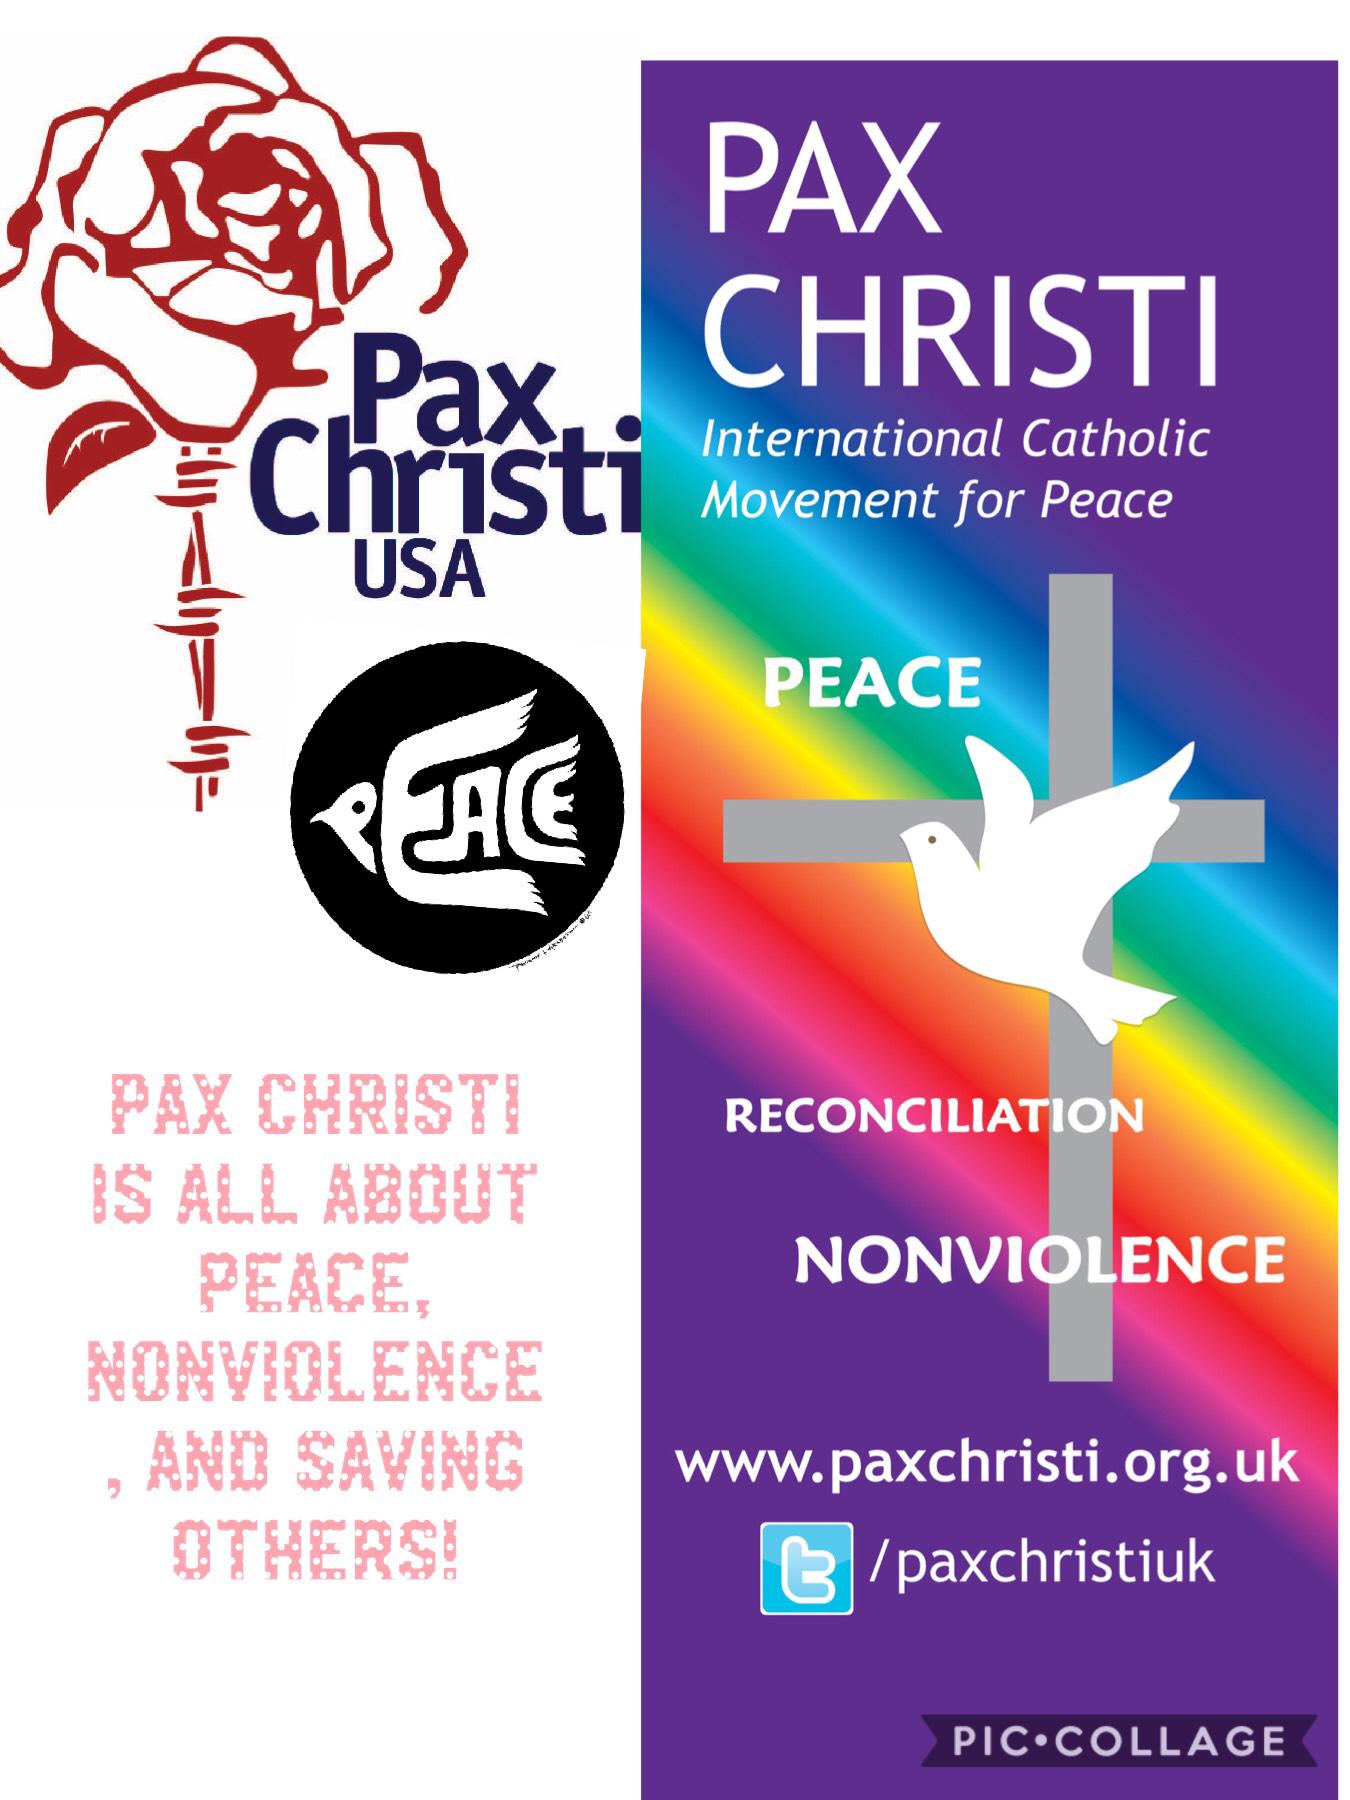 Pax Christi! Visit their site!